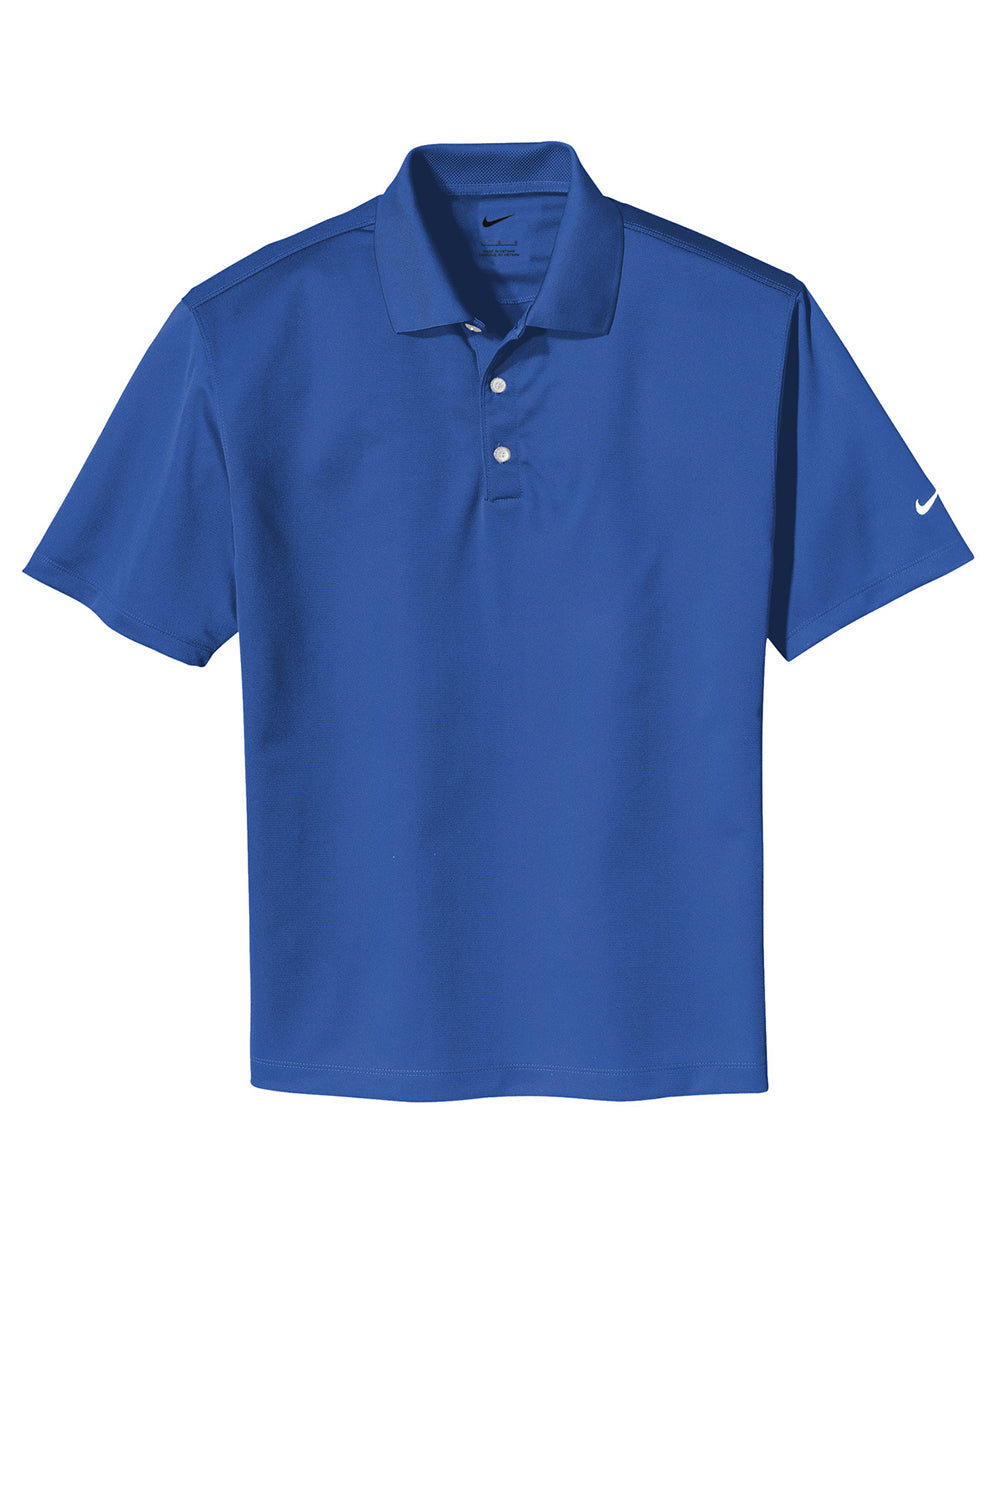 Nike 203690 Mens Tech Basic Dri-Fit Moisture Wicking Short Sleeve Polo Shirt Varsity Royal Blue Flat Front